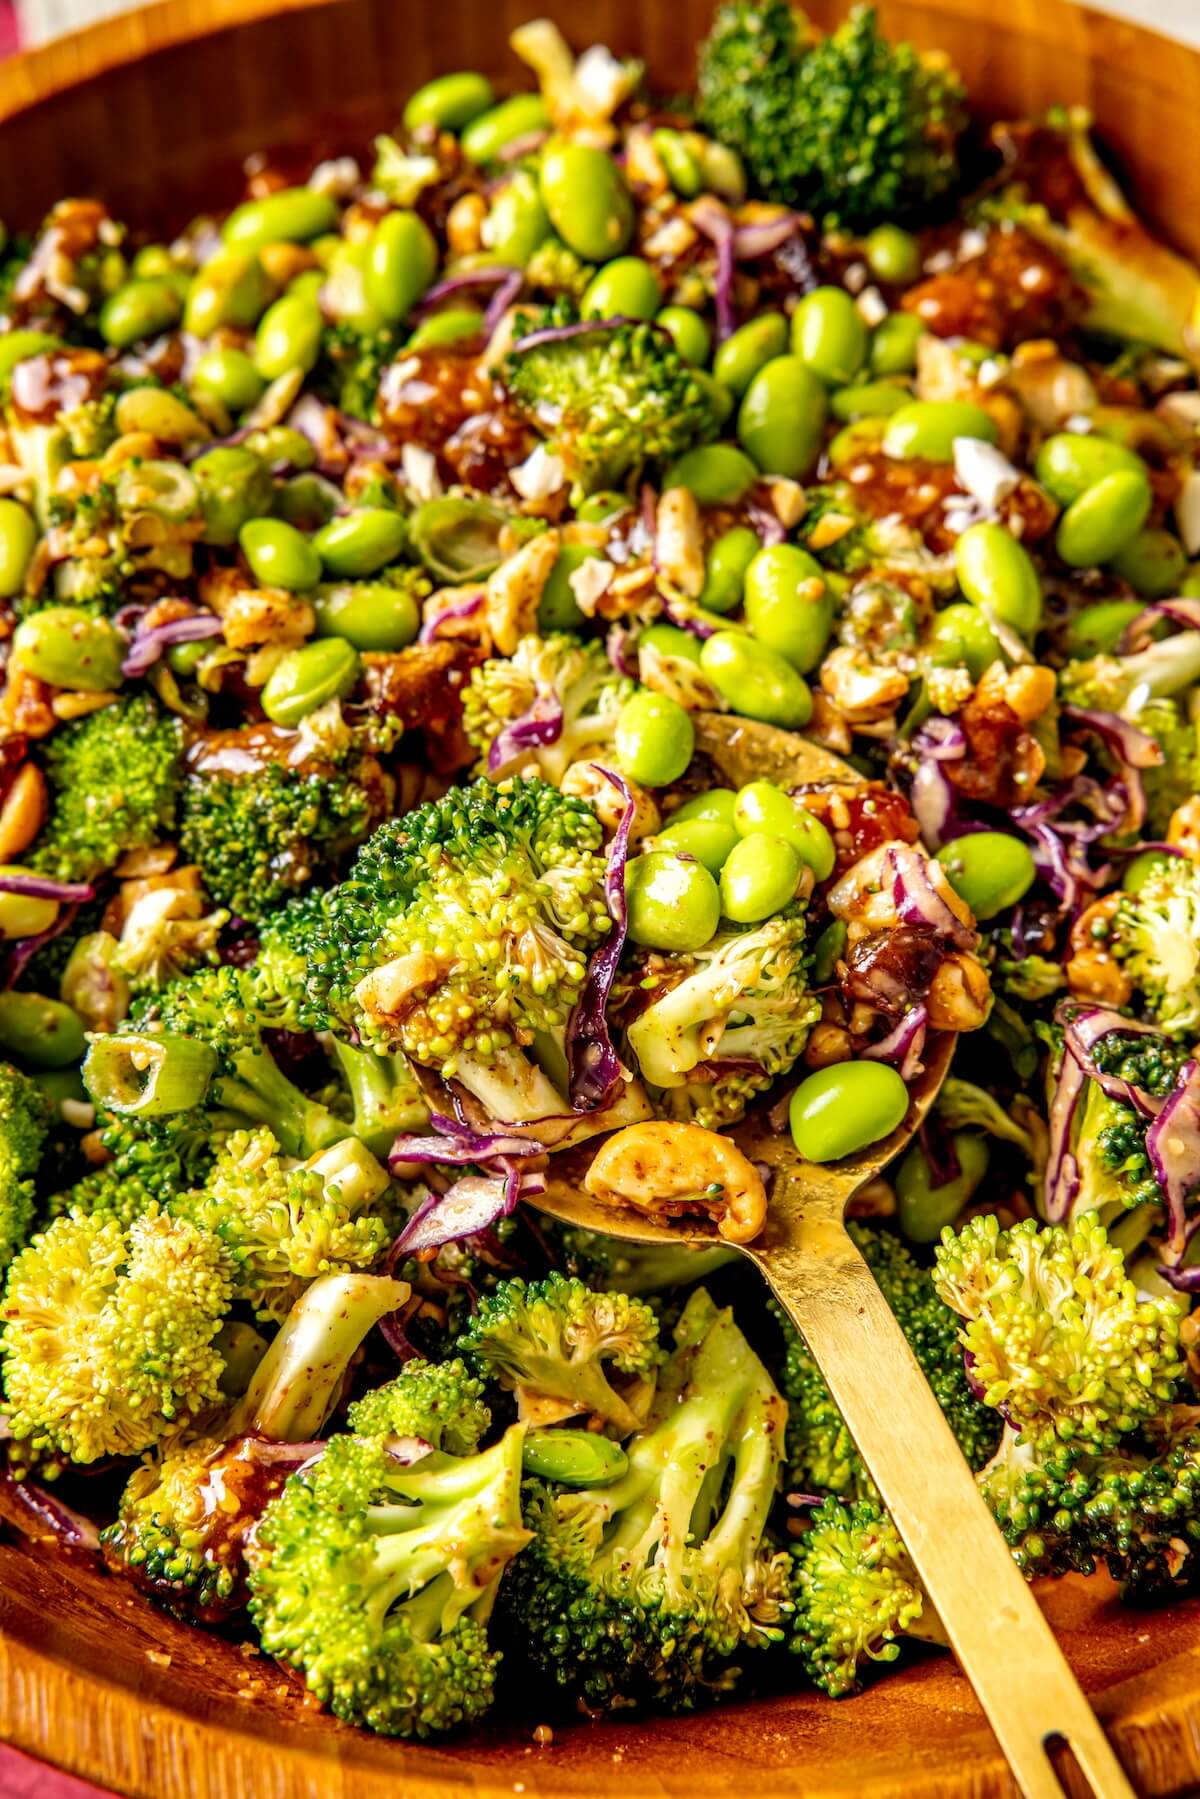 Broccoli Crunch Salad - Olivia Adriance